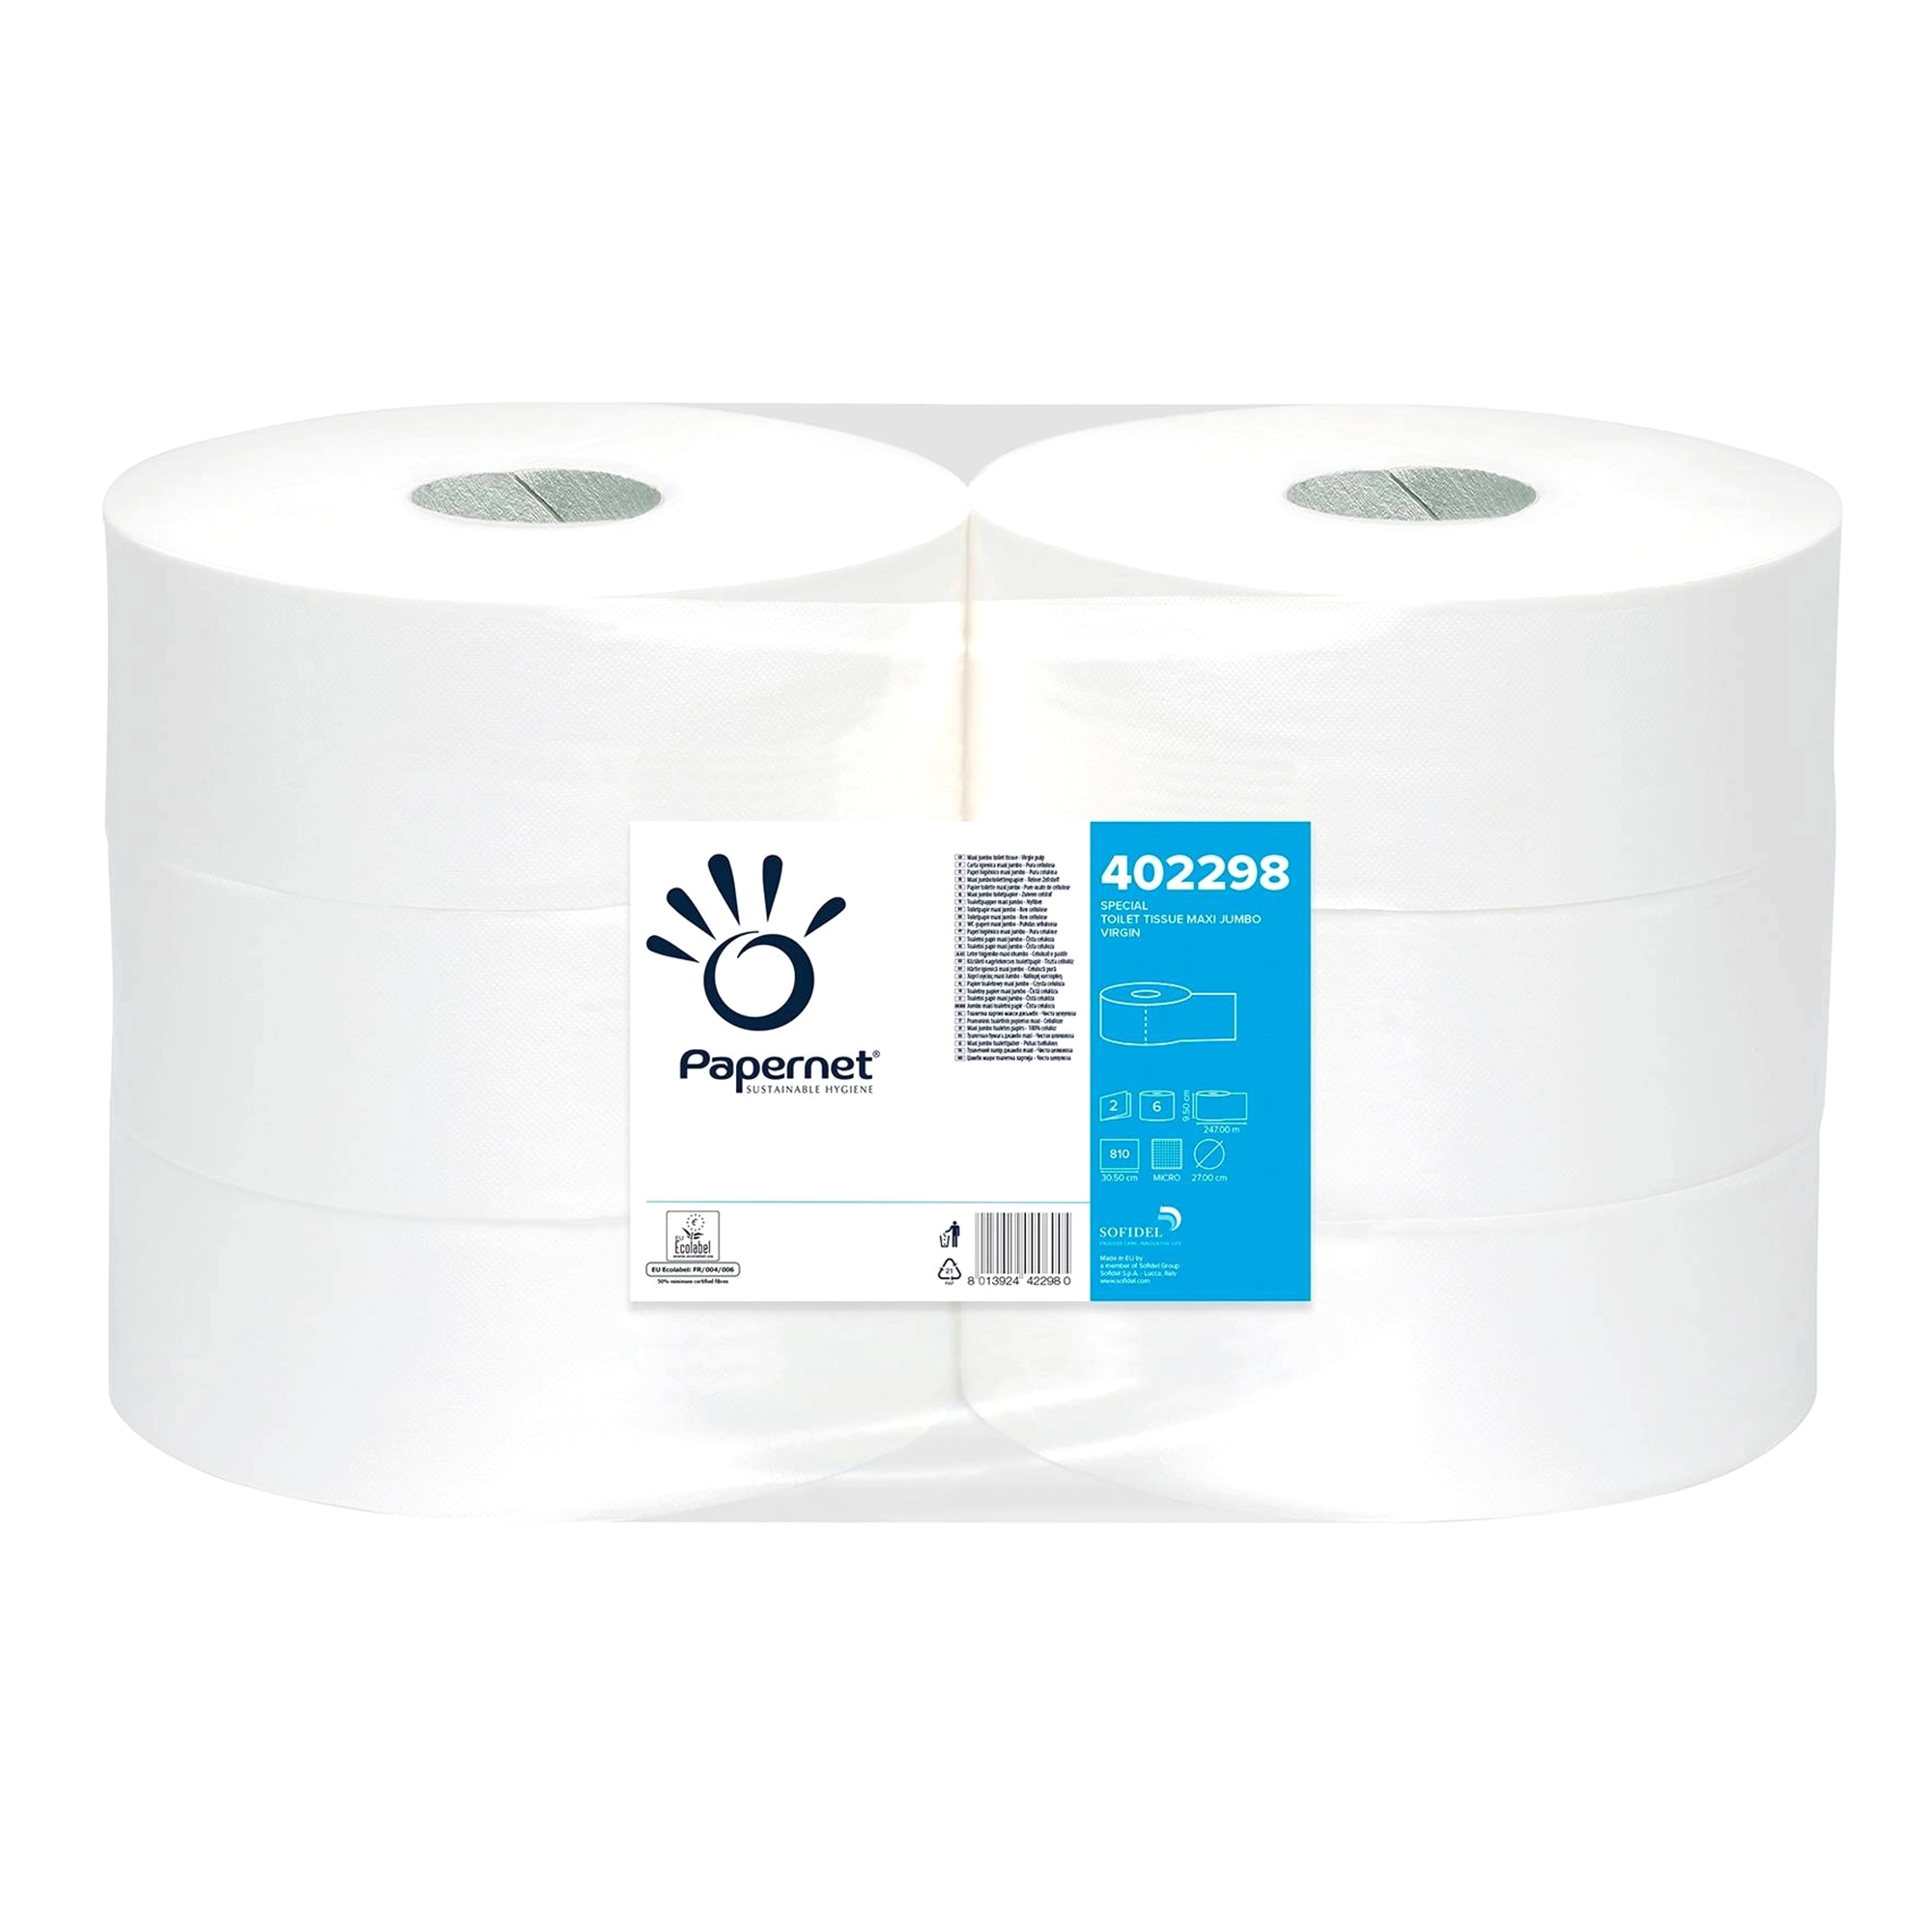 Papernet Toilettenpapier Maxi Jumborolle weiß 2-lagig, 247 Meter